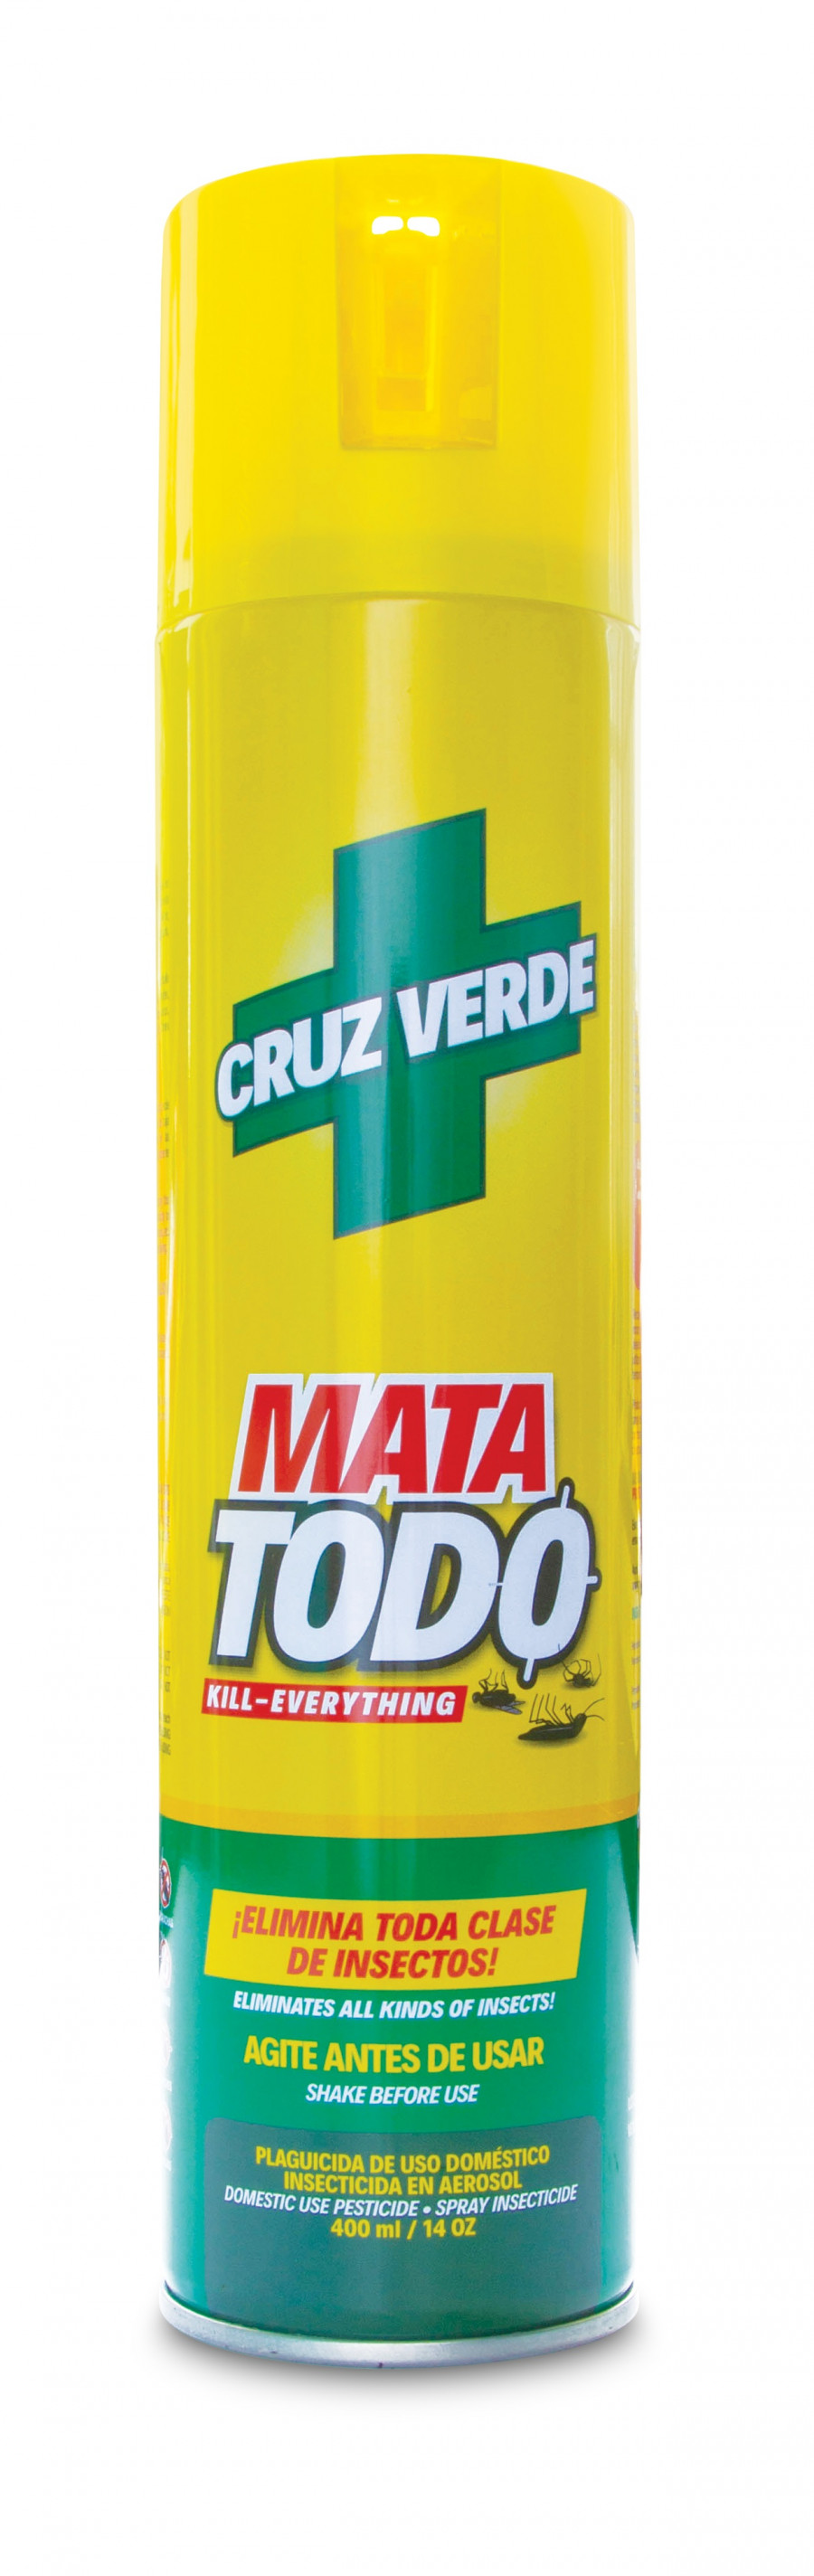 Cruz Verde Mata Todo 400 ml aer. C12 #5558